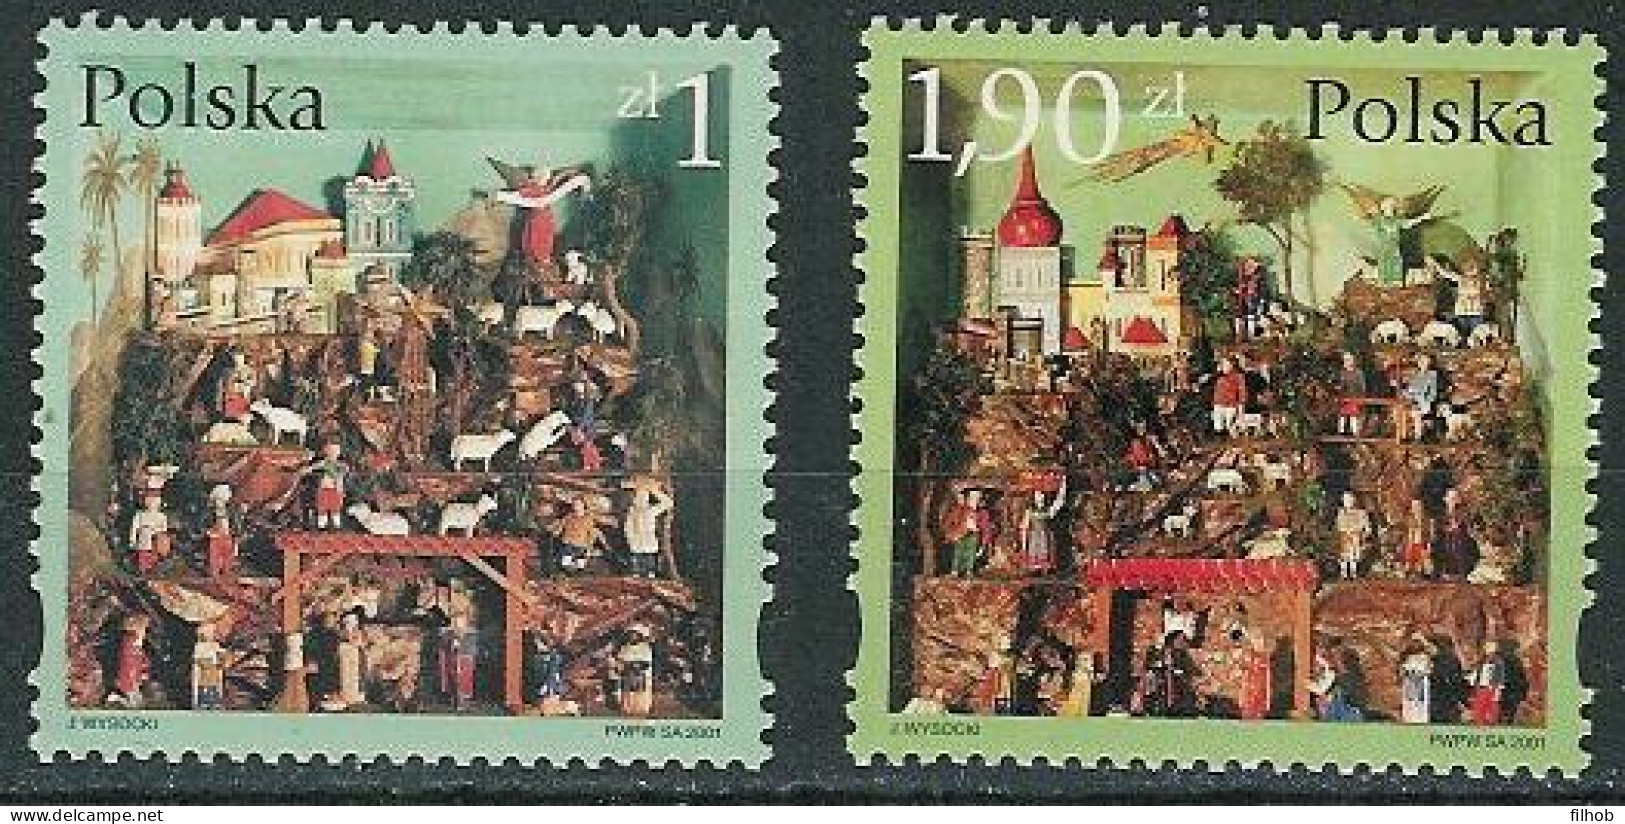 Poland Stamps MNH ZC.3796-97: Christmas (XI) - Neufs